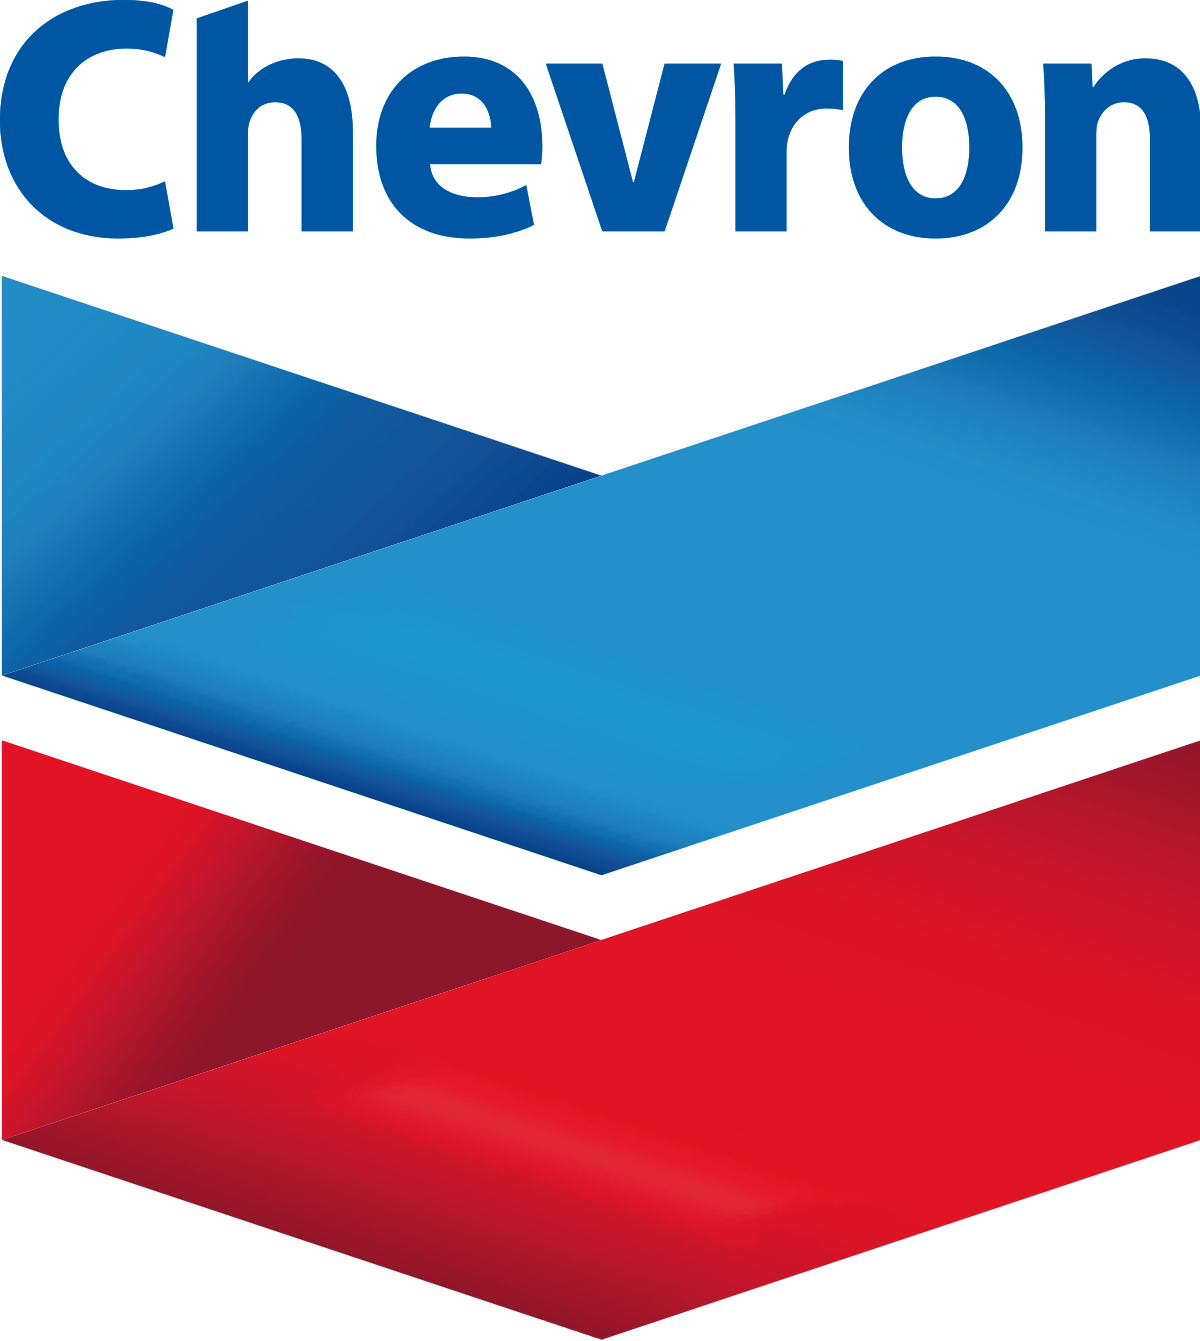 Orange Chevron Logo - Chevron Corporation